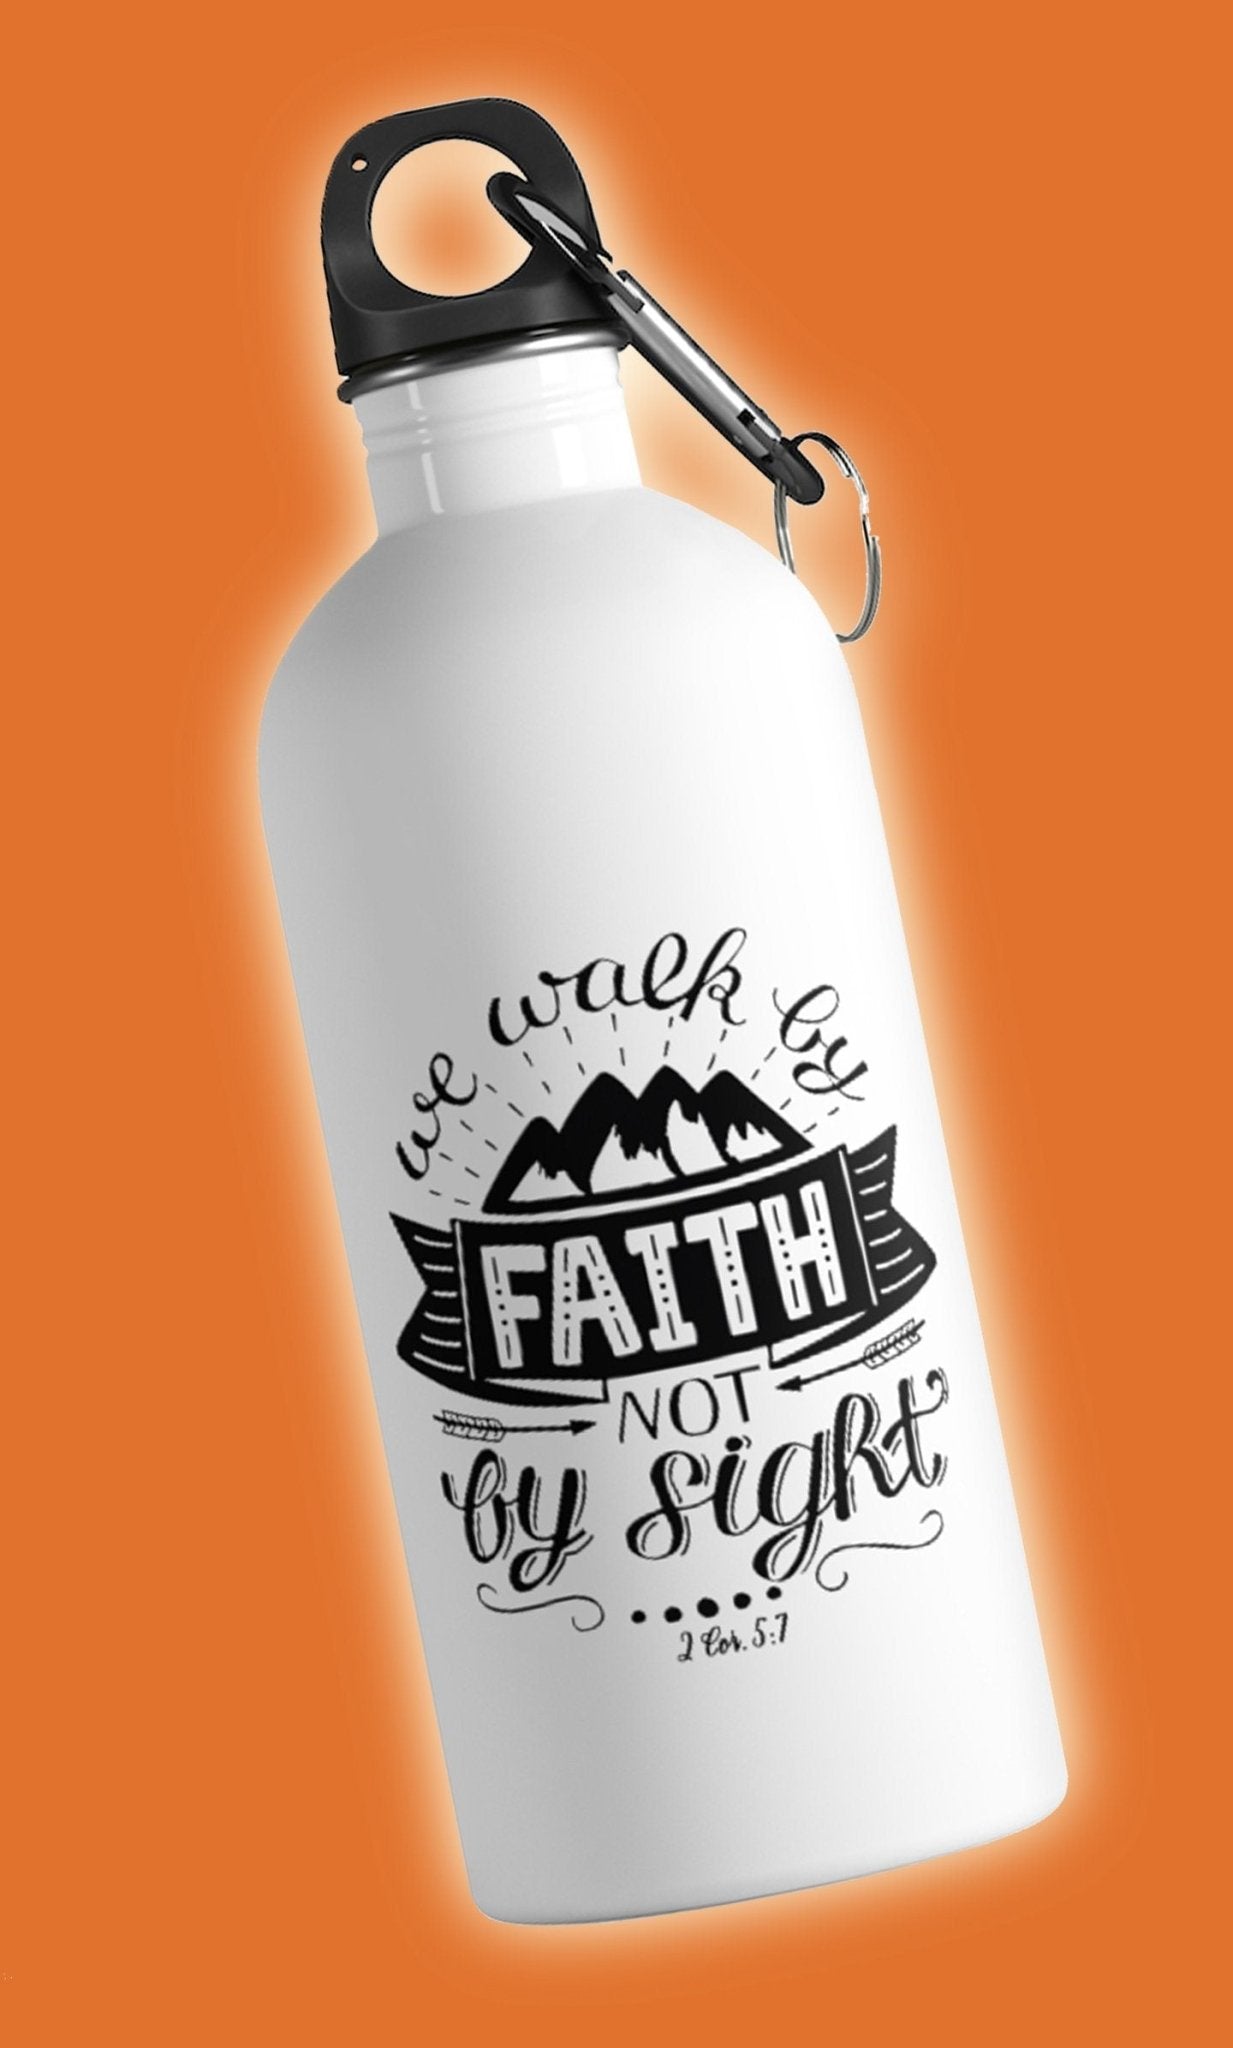 Walk By Faith - Water Bottle - Trini-T Ministries